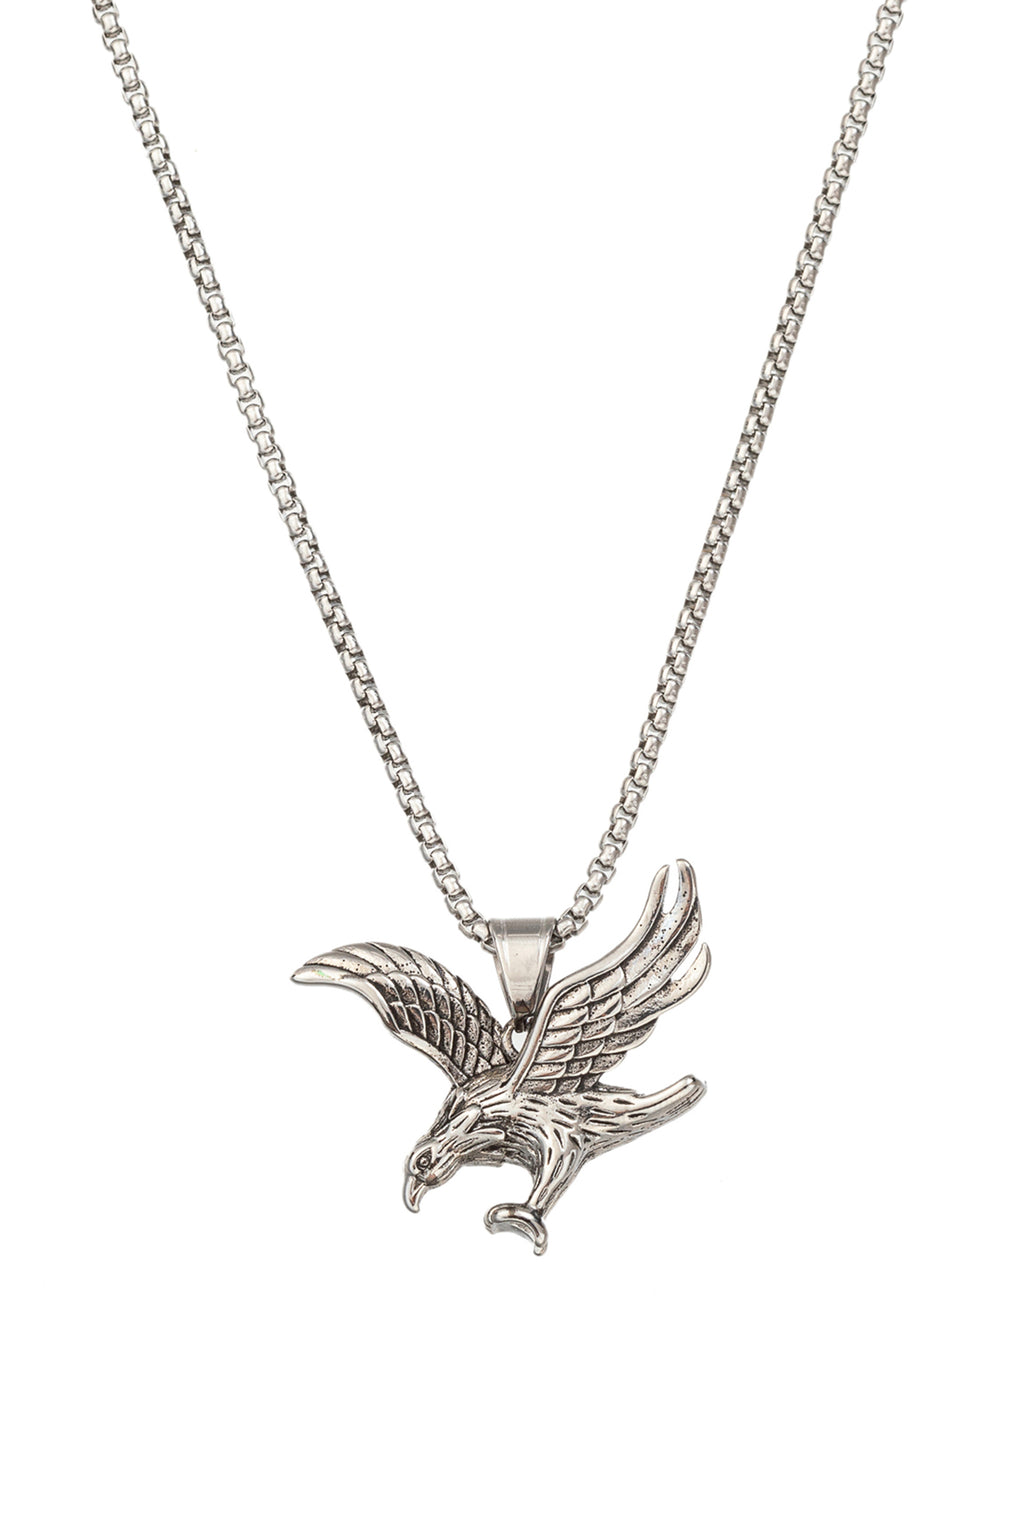 Silver tone titanium eagle pendant necklace.